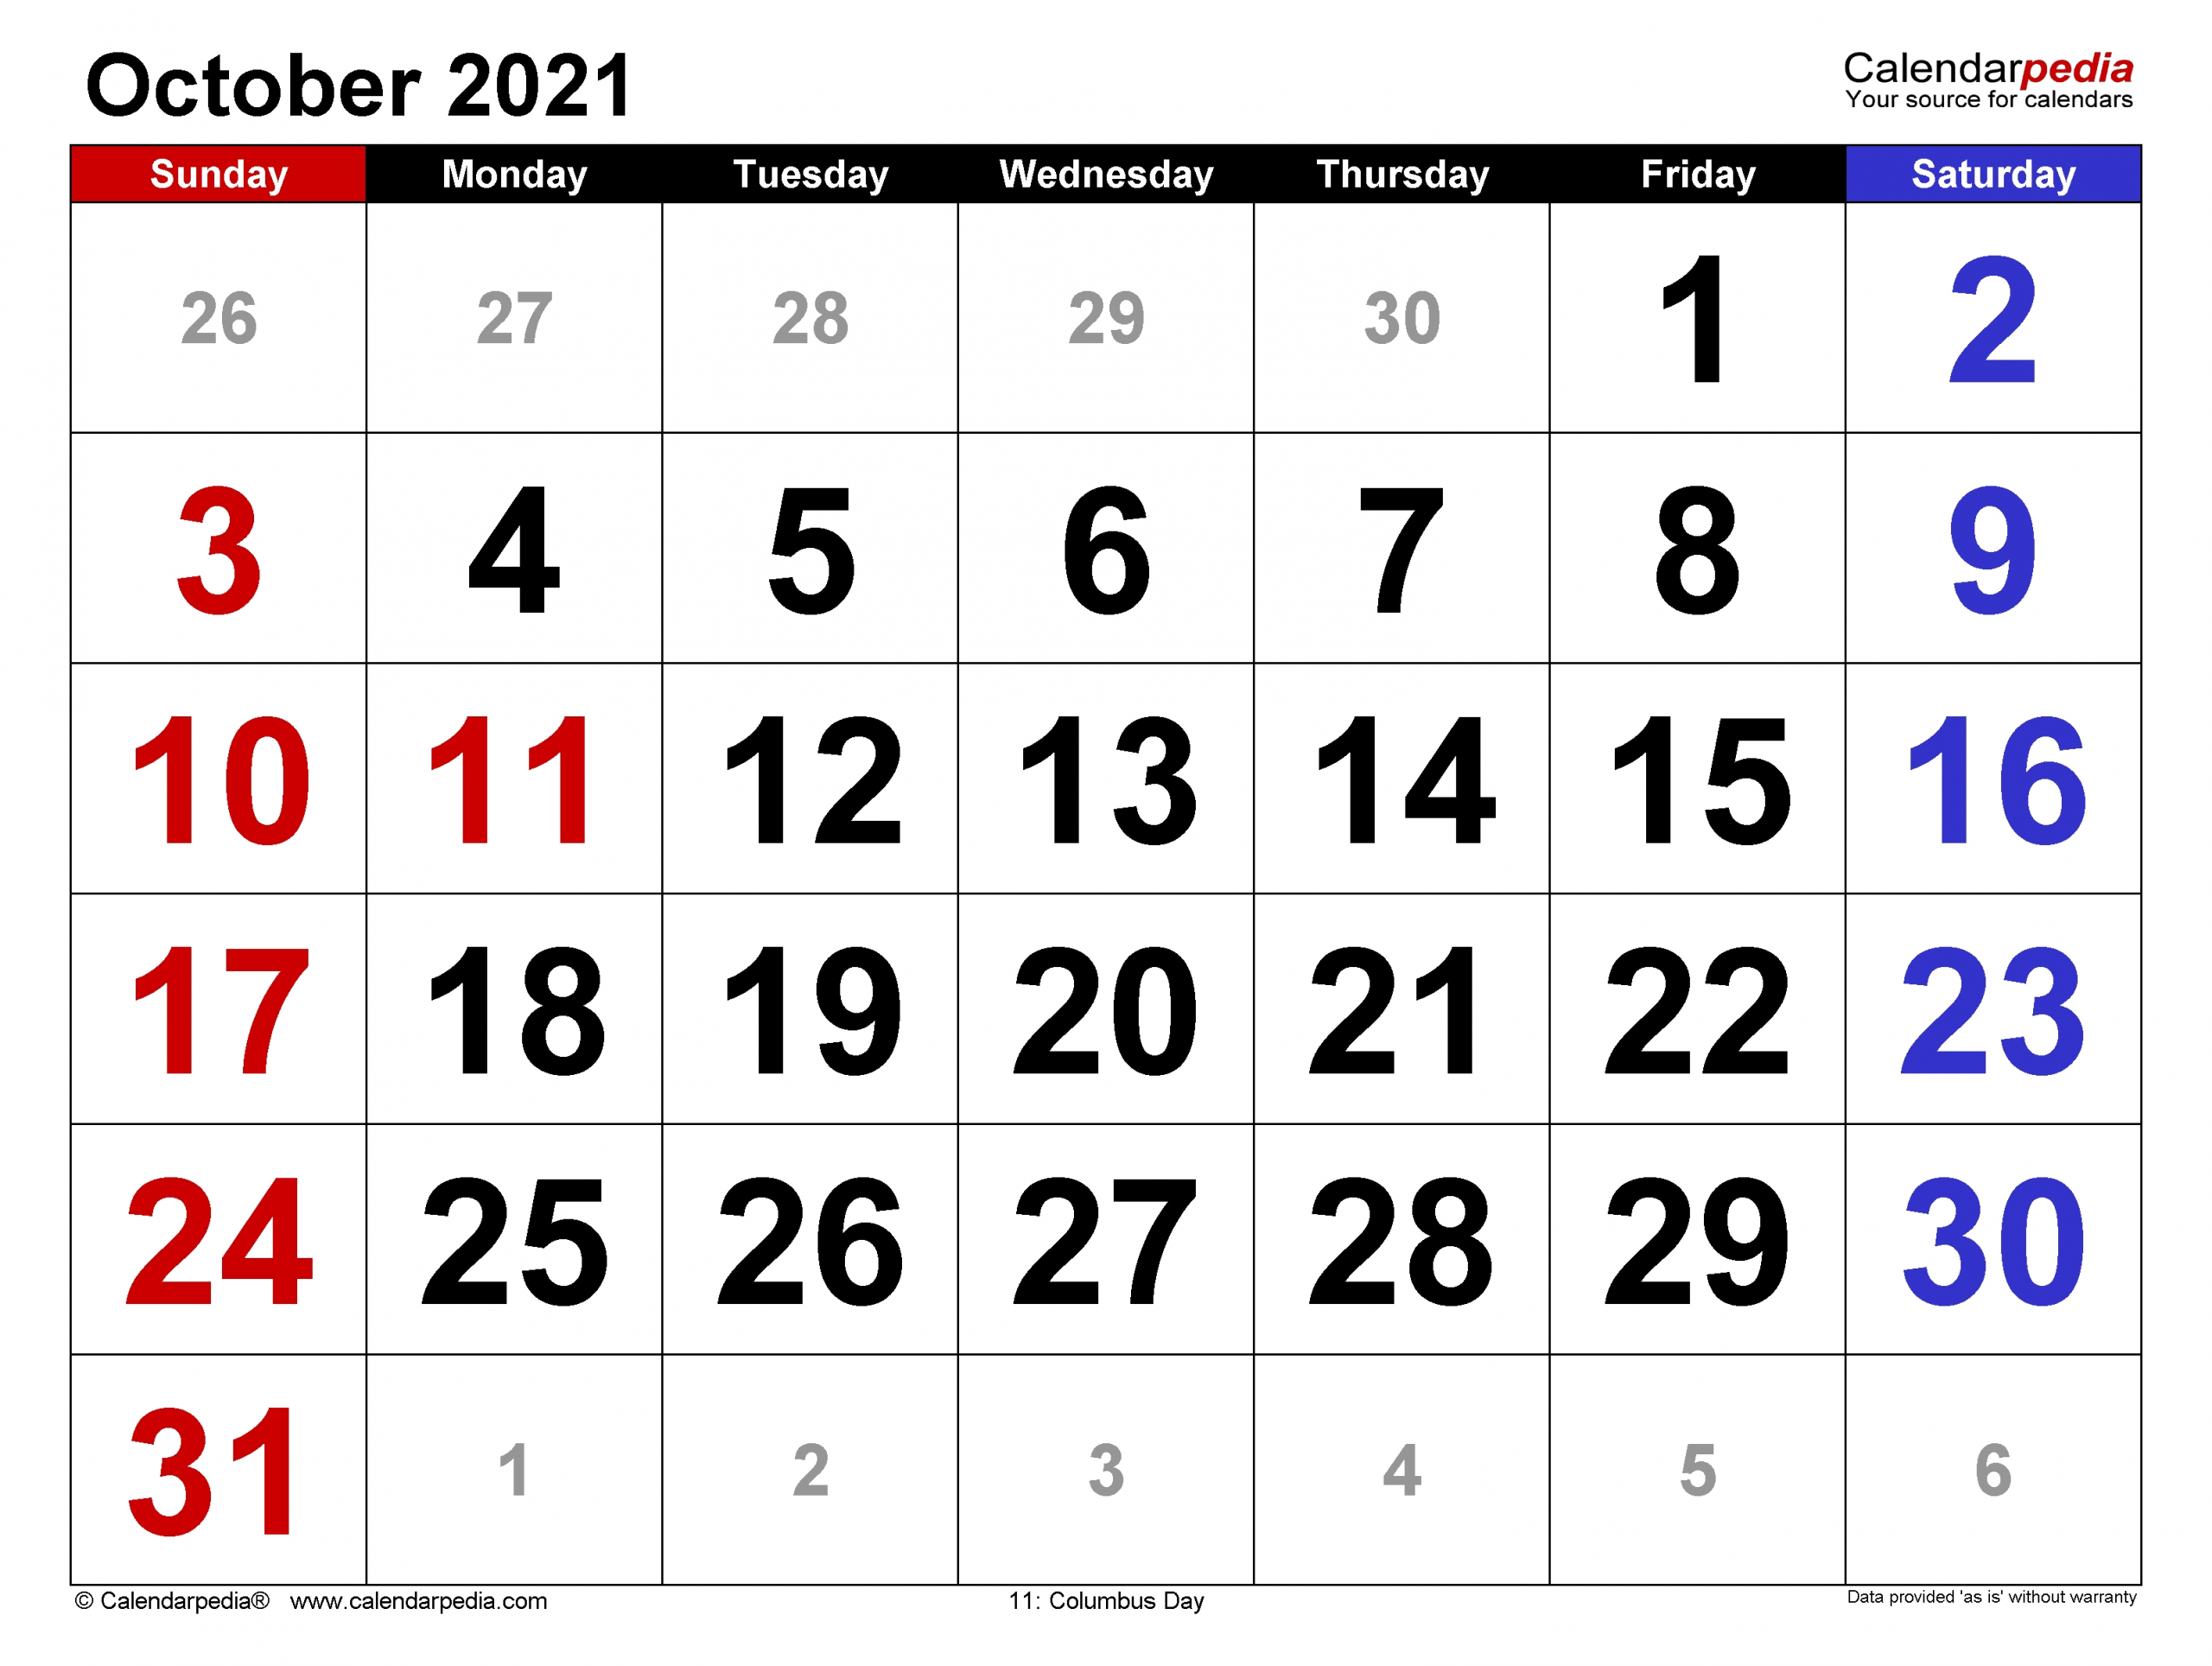 Catch October 2021 Calendar